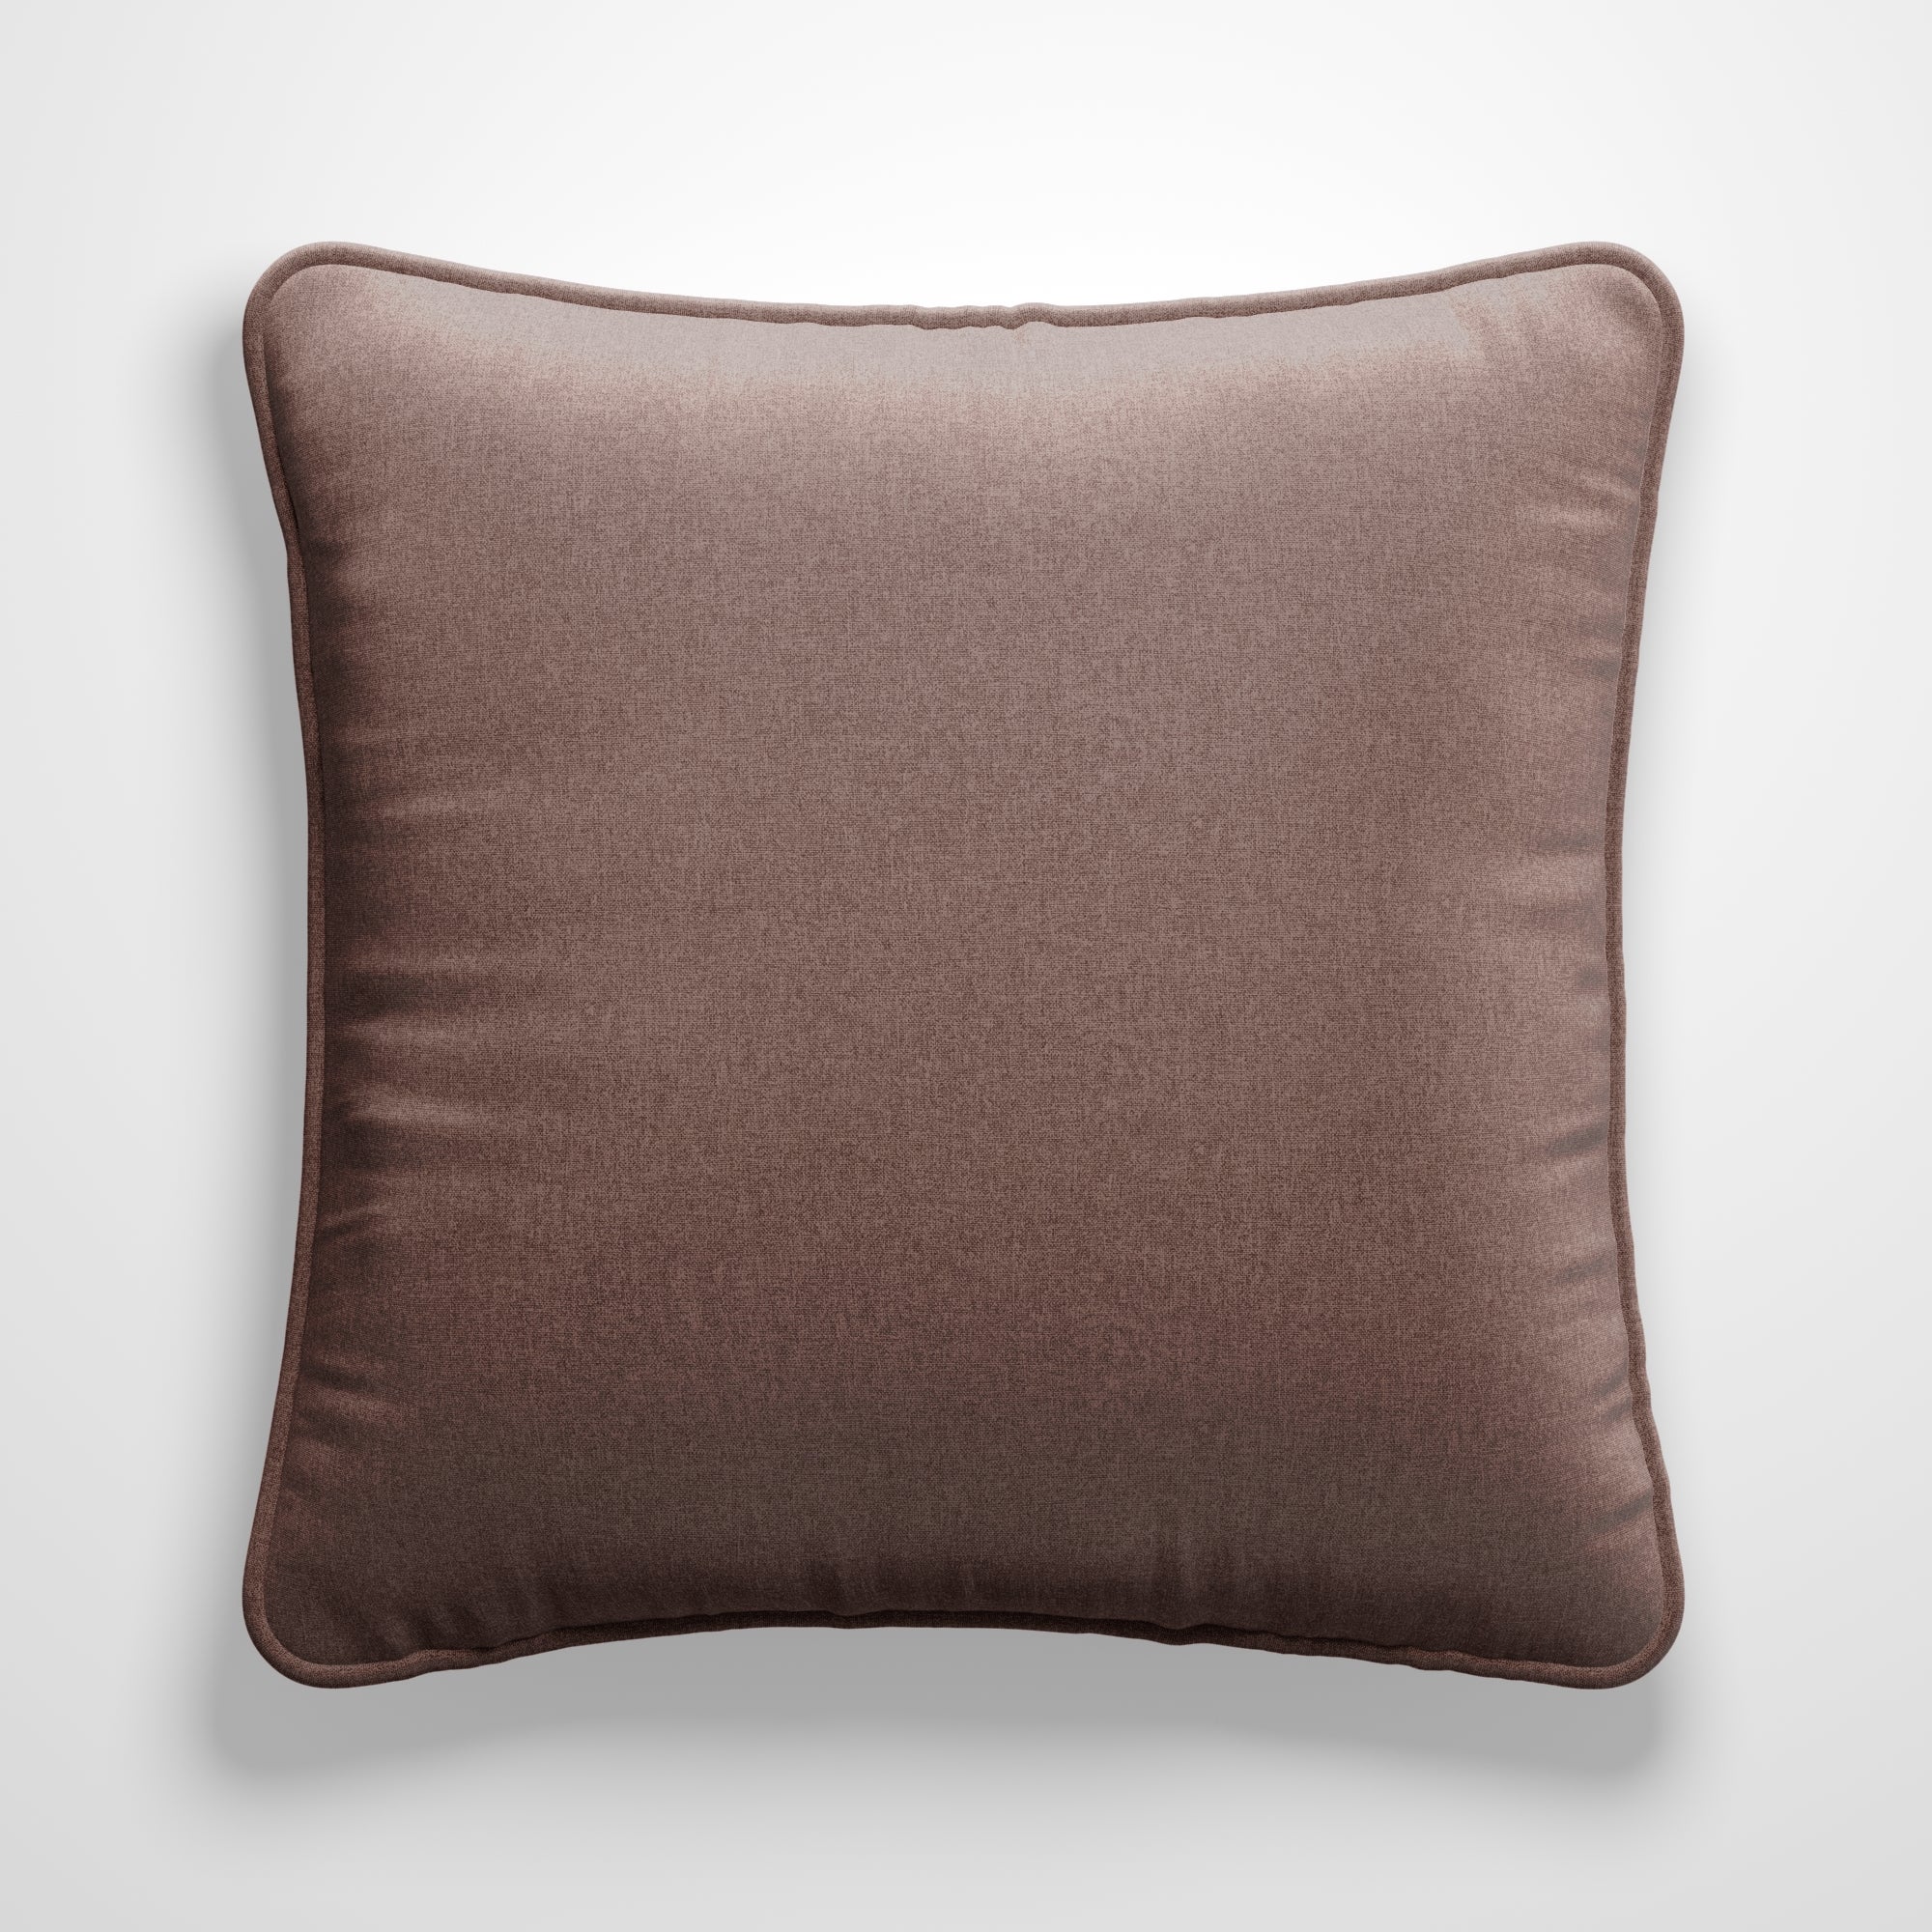 Savanna Made to Order Fire Retardant Cushion Cover Savanna Blush